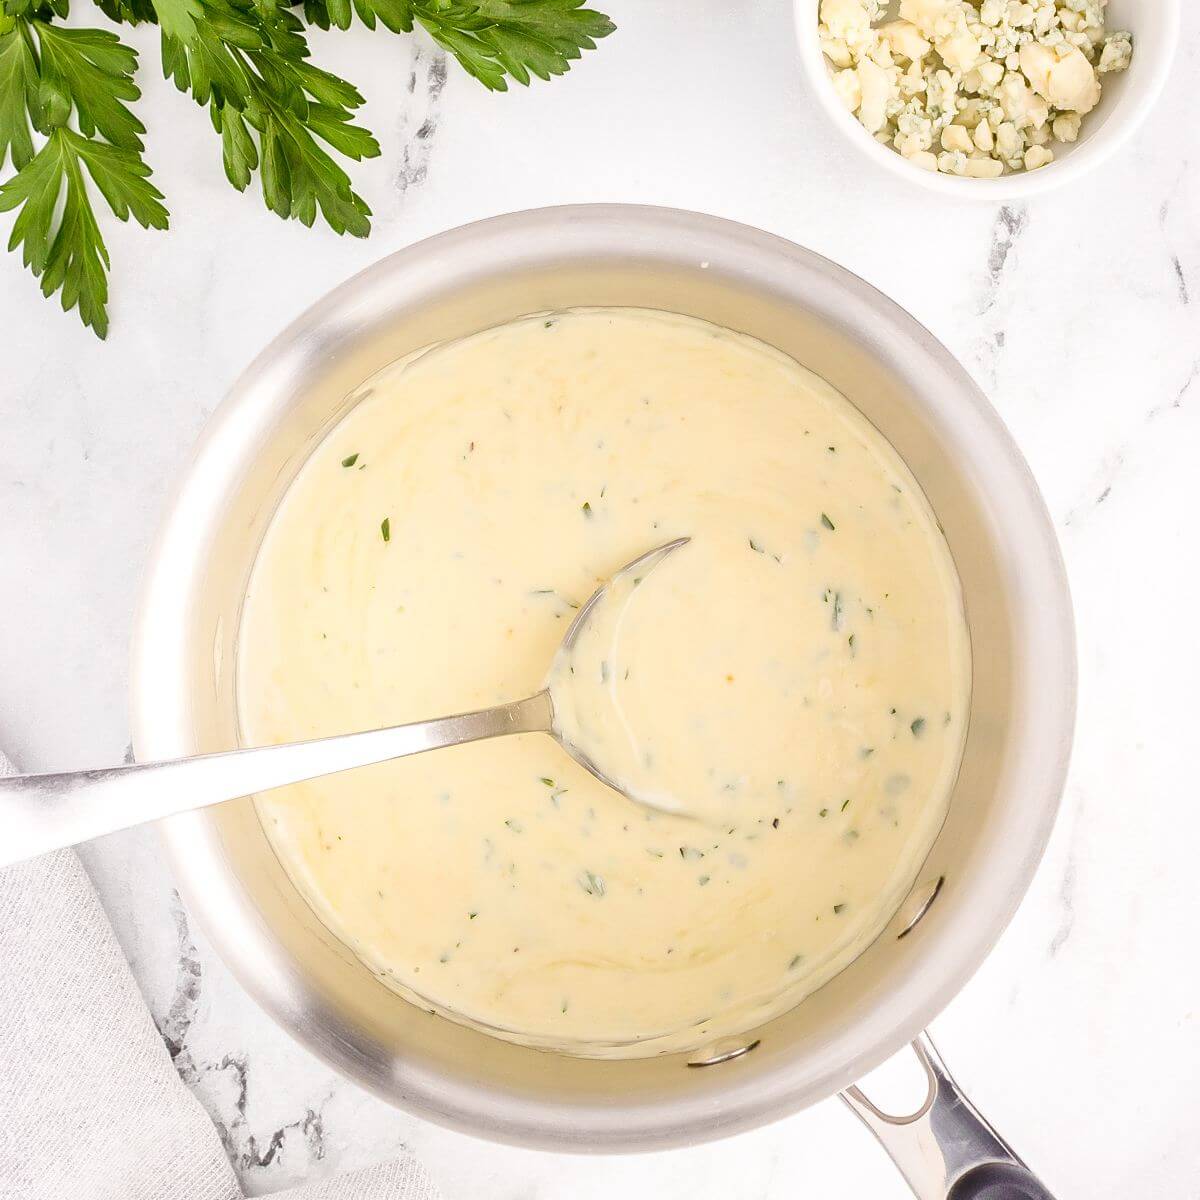 Easy Gorgonzola Cream Sauce — Lauren Lane Culinarian